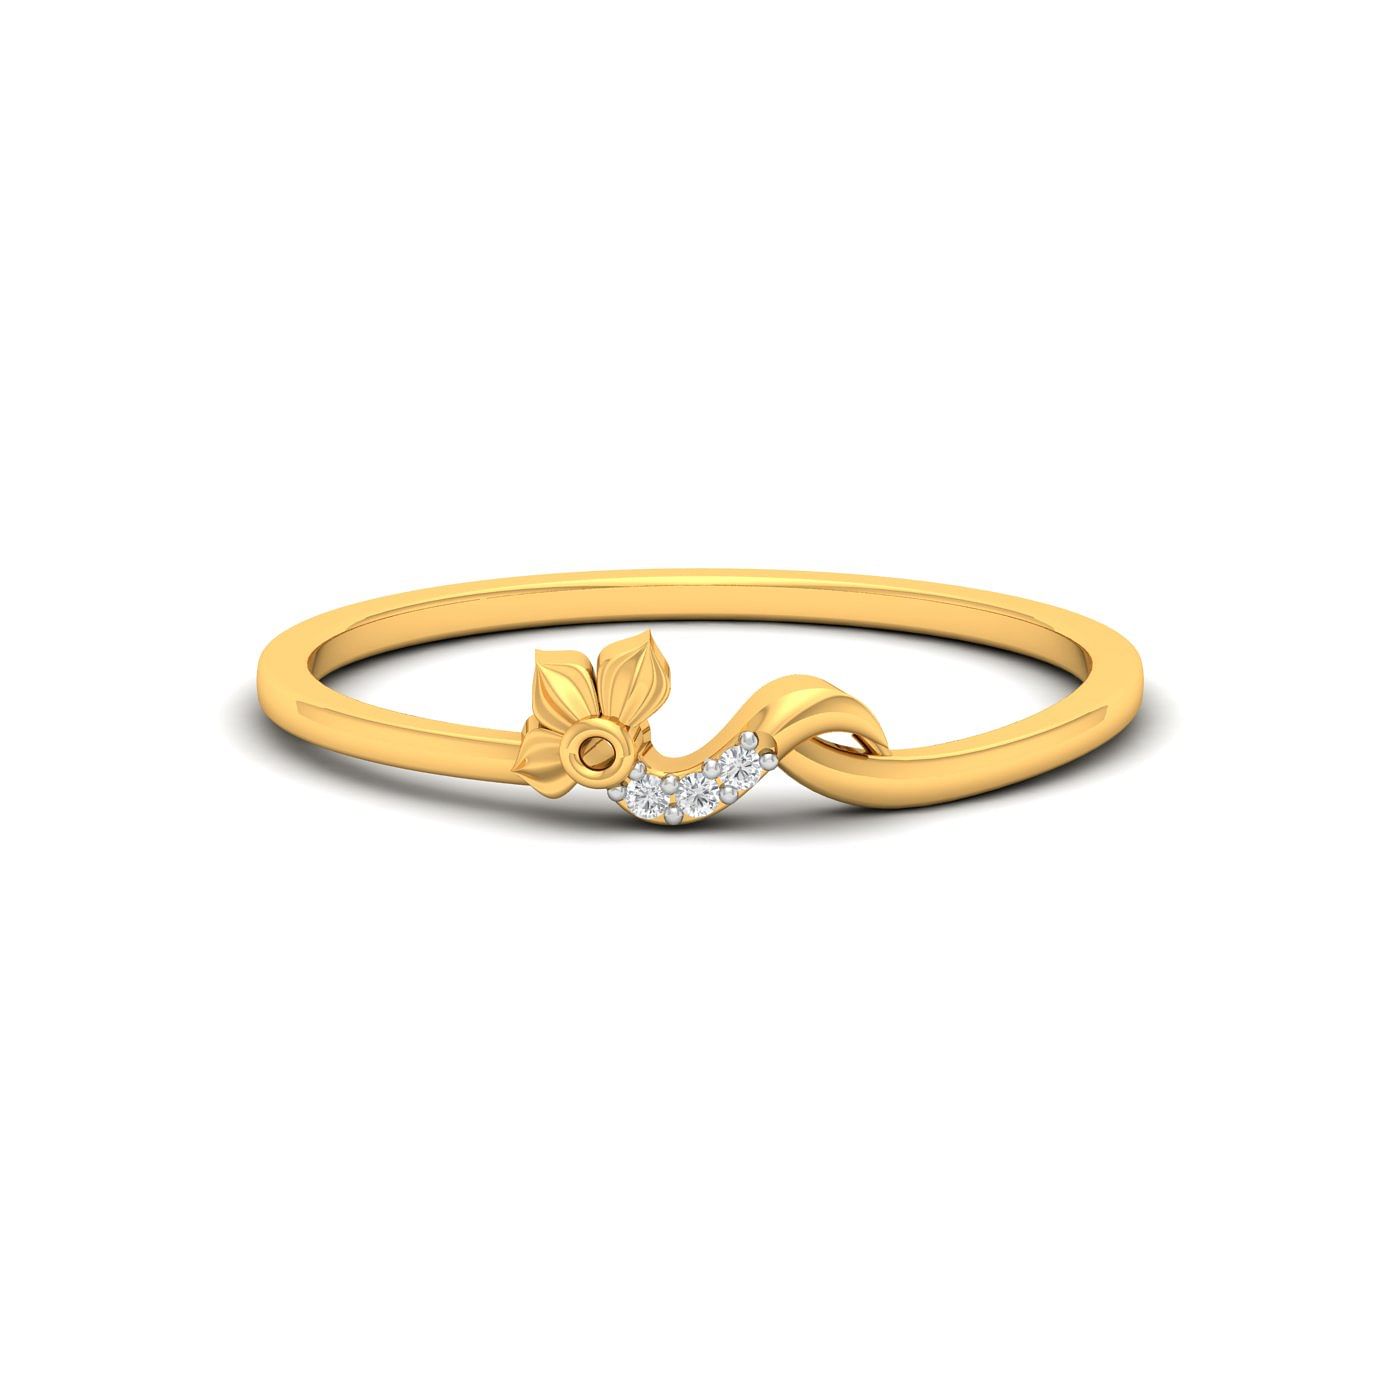 Blume Three Stone Diamond Ring 14k yellow gold diamond ring for her